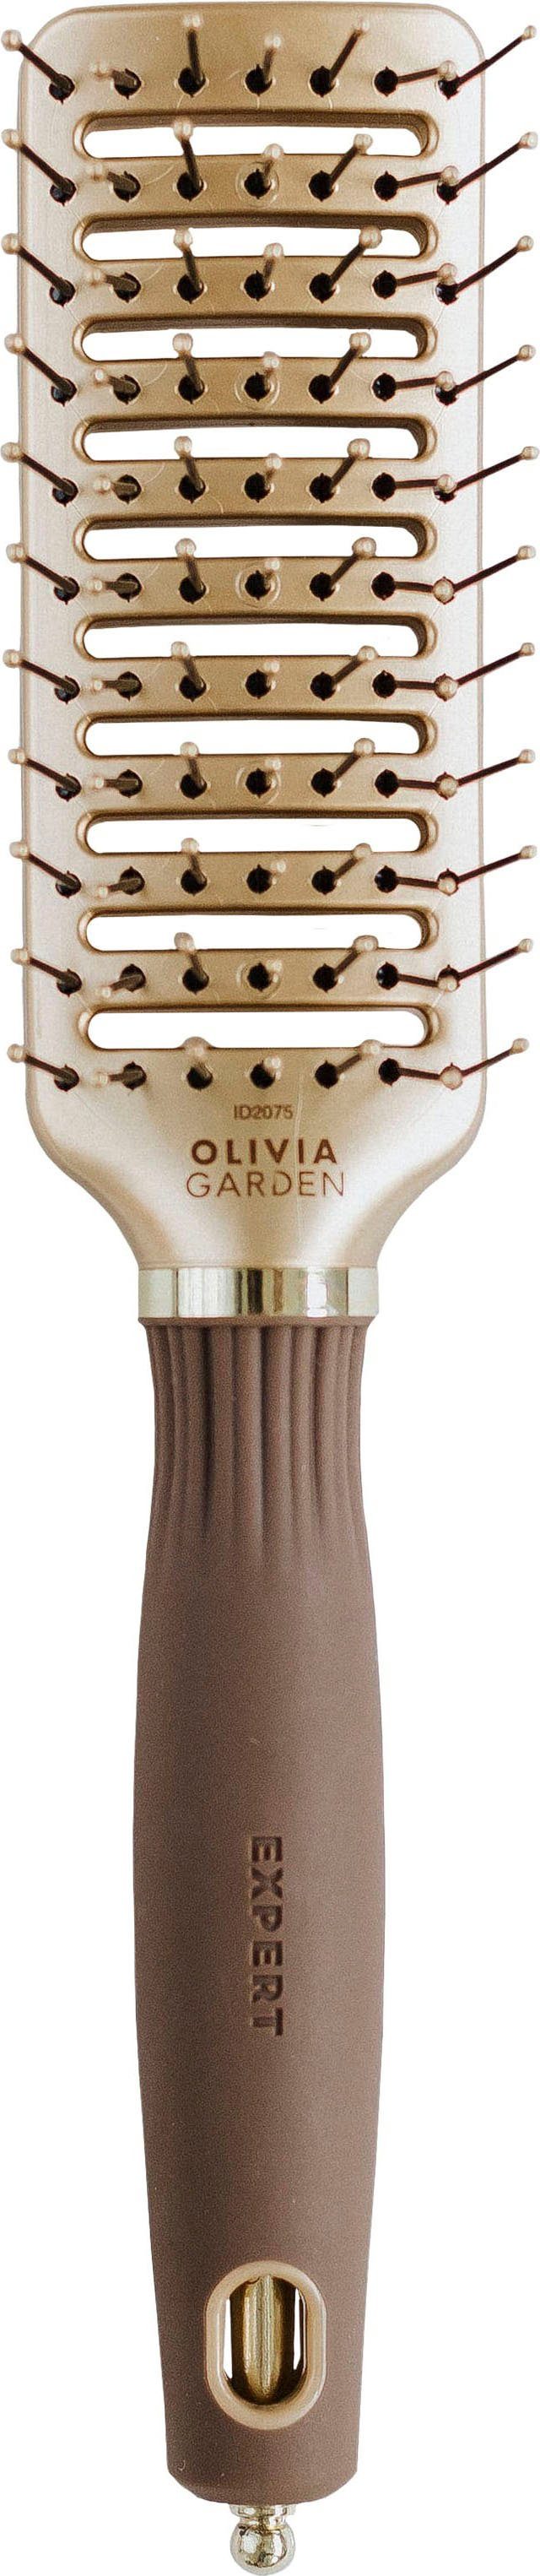 OLIVIA GARDEN Haarbürste EXPERT STYLE Gold&Brown Bristles VENT Nylon